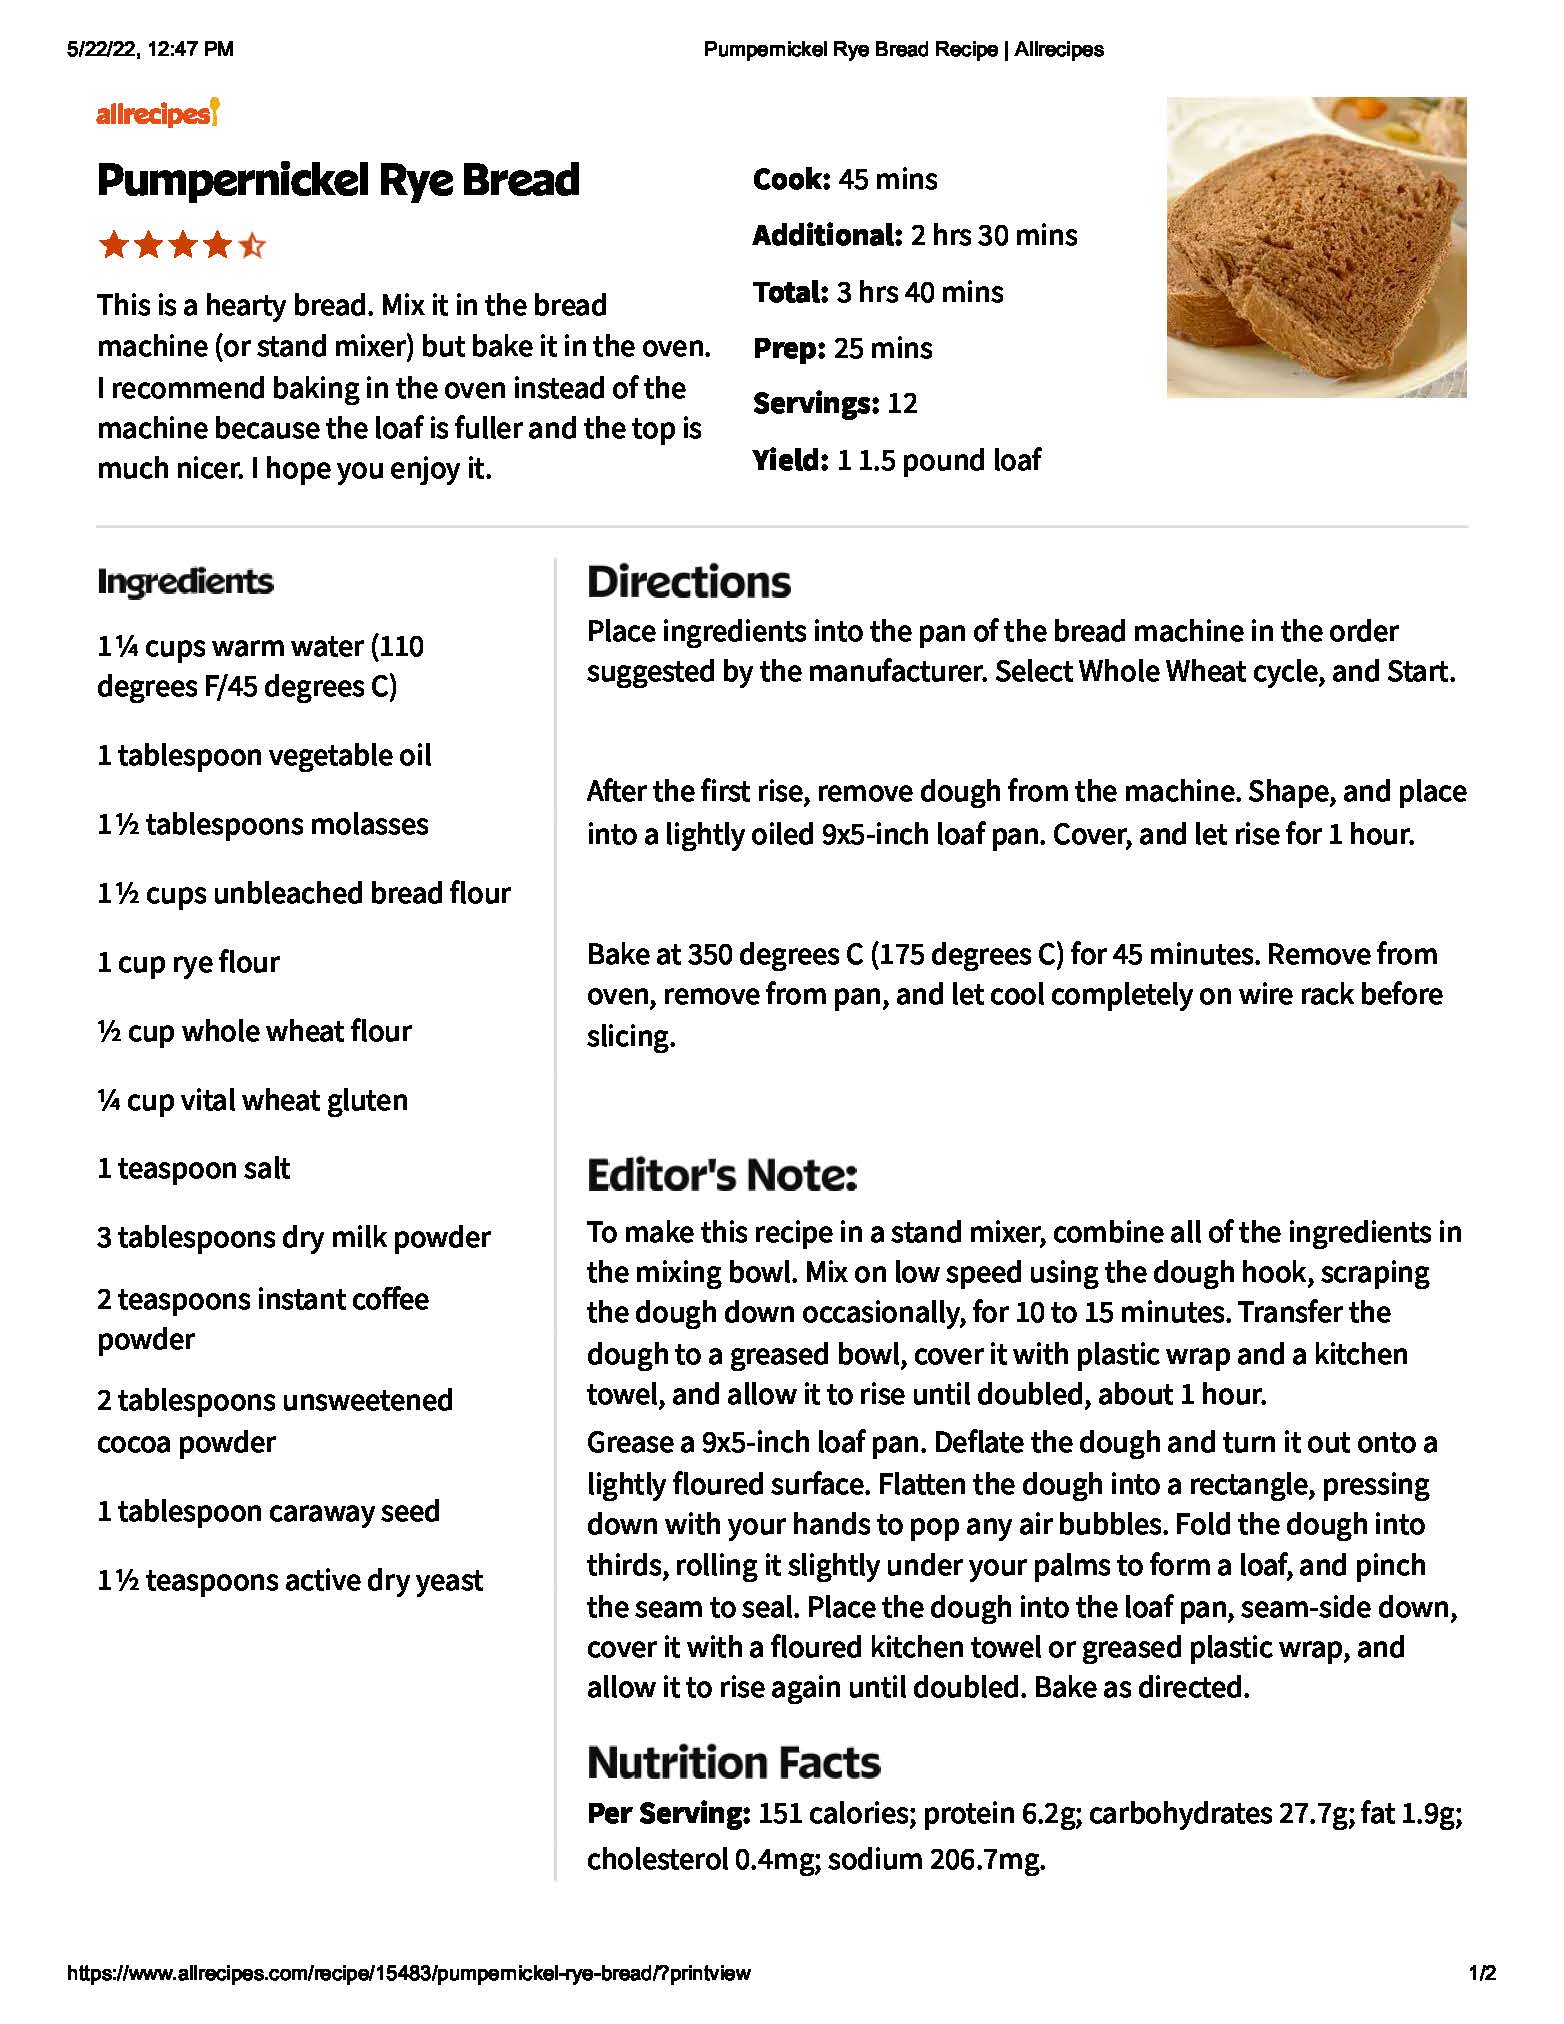 Pumpernickel Rye Bread Recipe